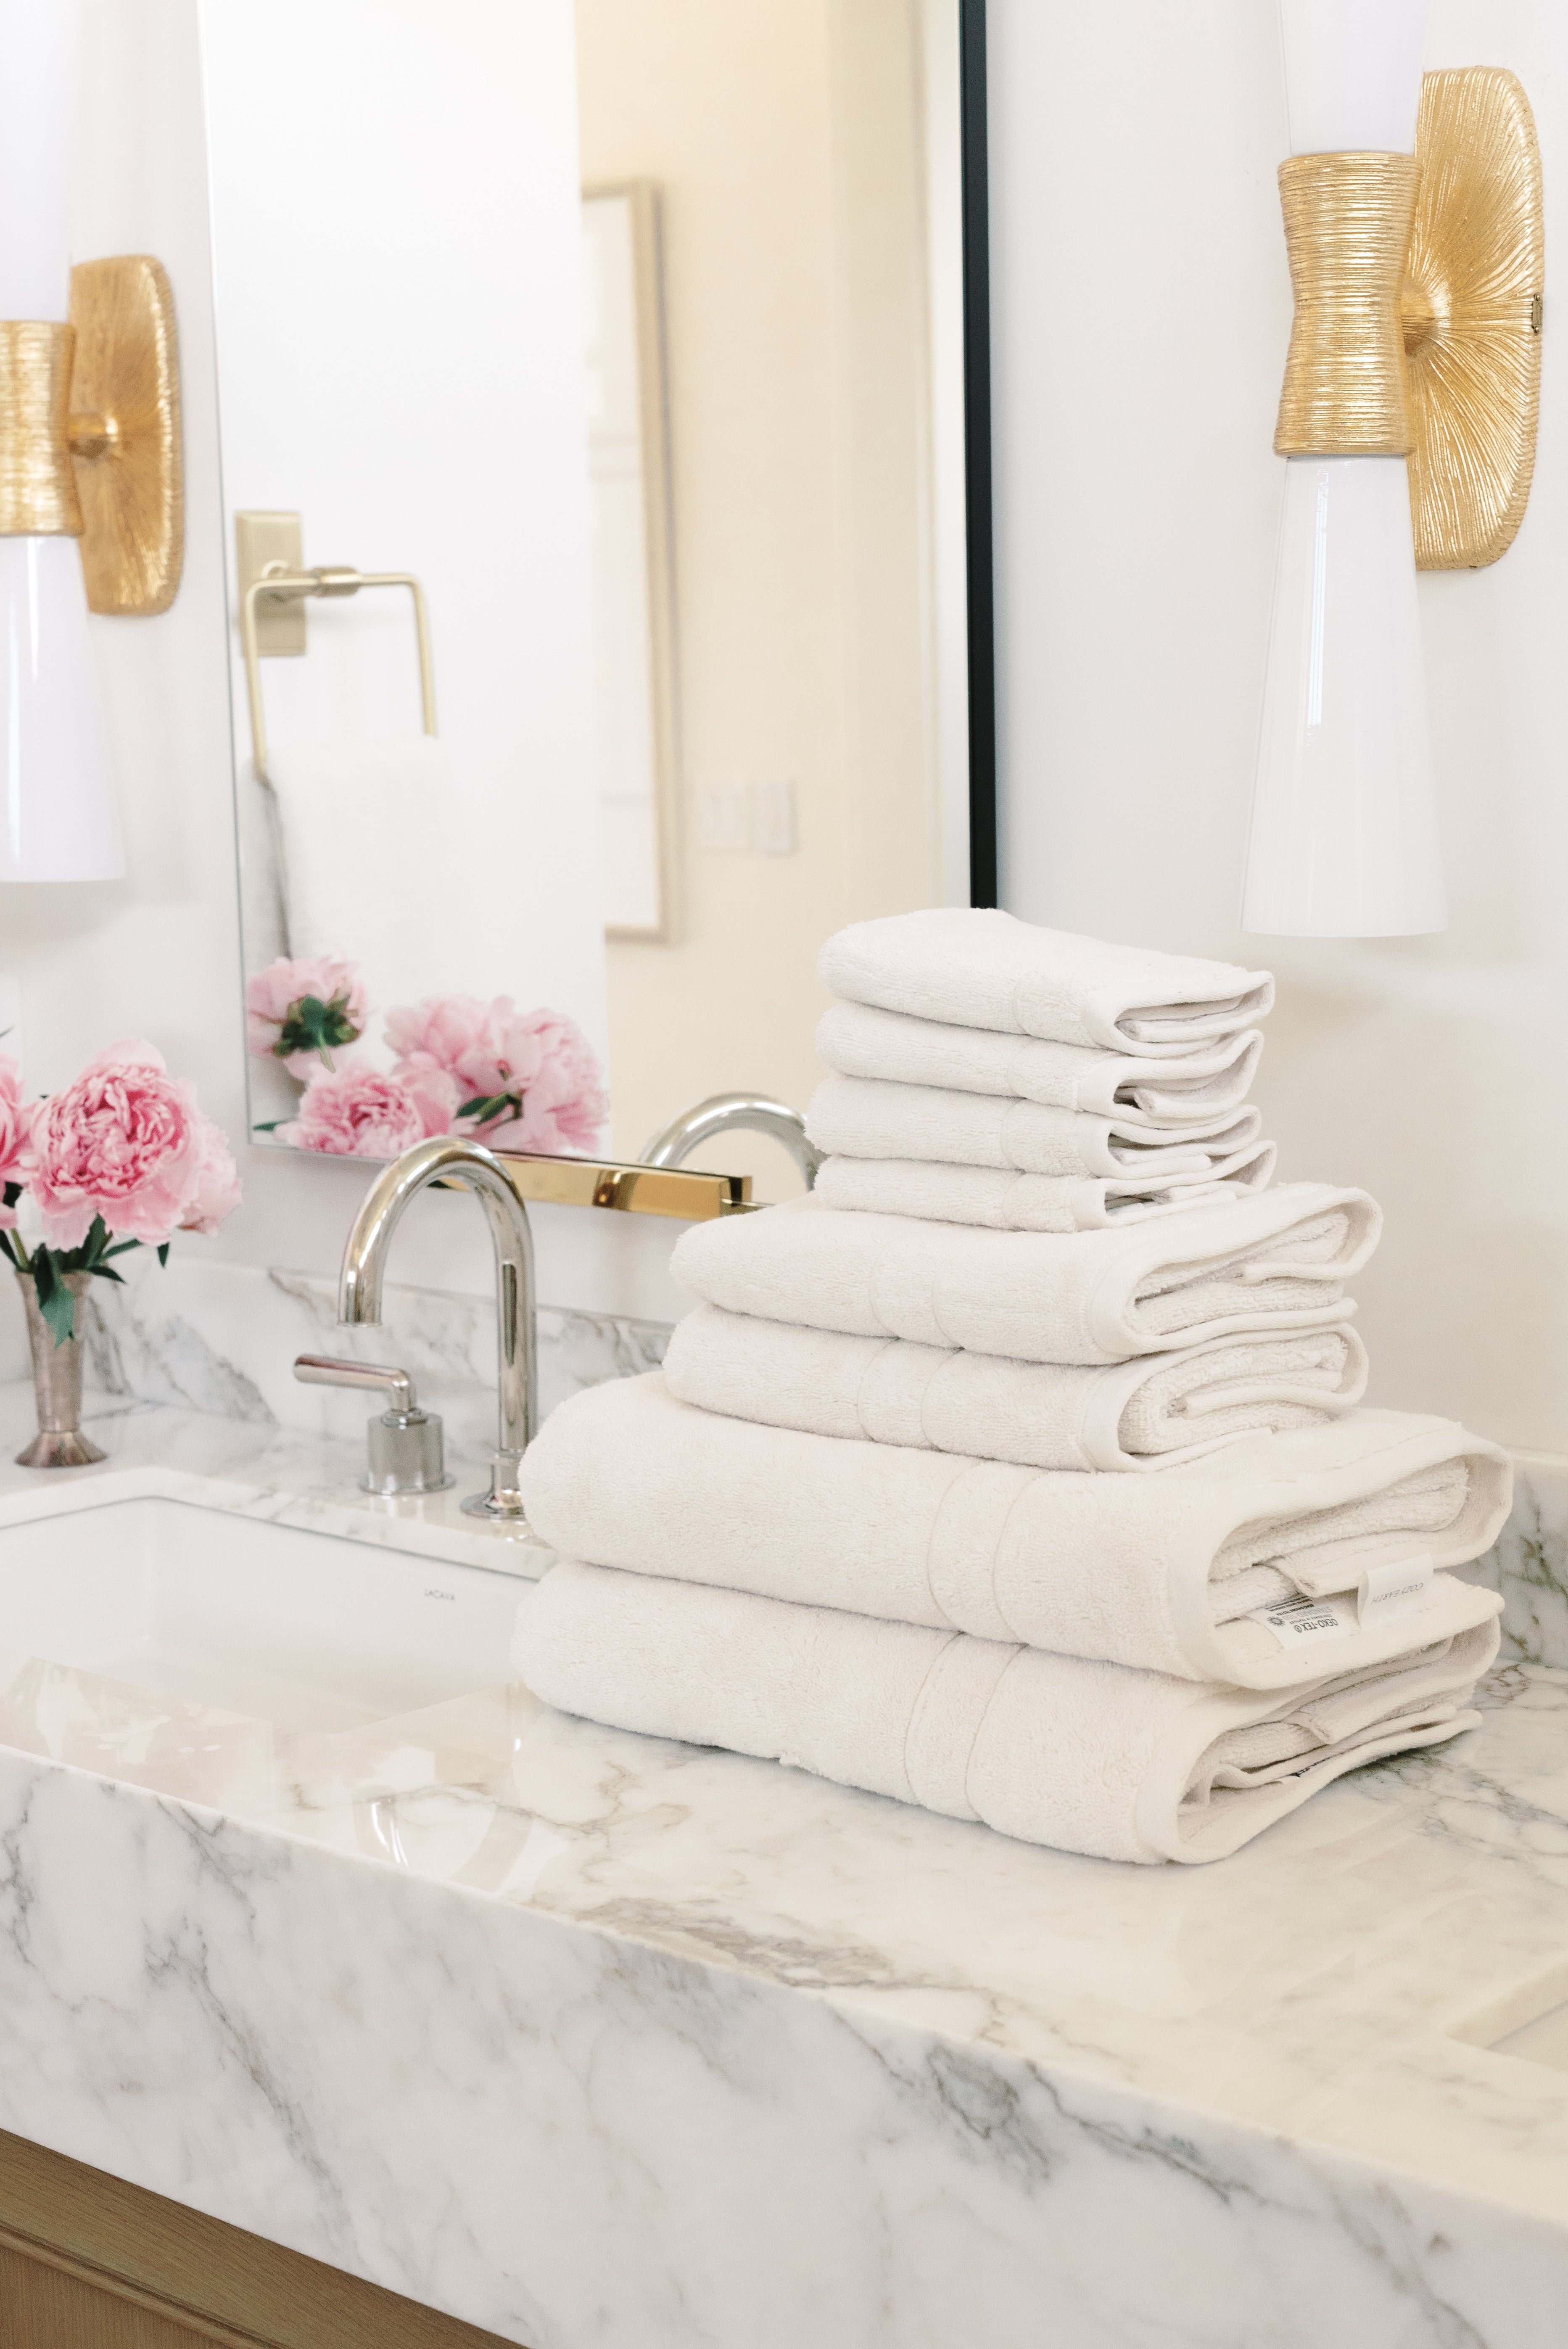 Premium Plush Bath Towel Set in the color Seashell. Photo of Clay Premium Plush Bath Towel Set taken in a bathroom featuring white backsplash tile |Color:Seashell